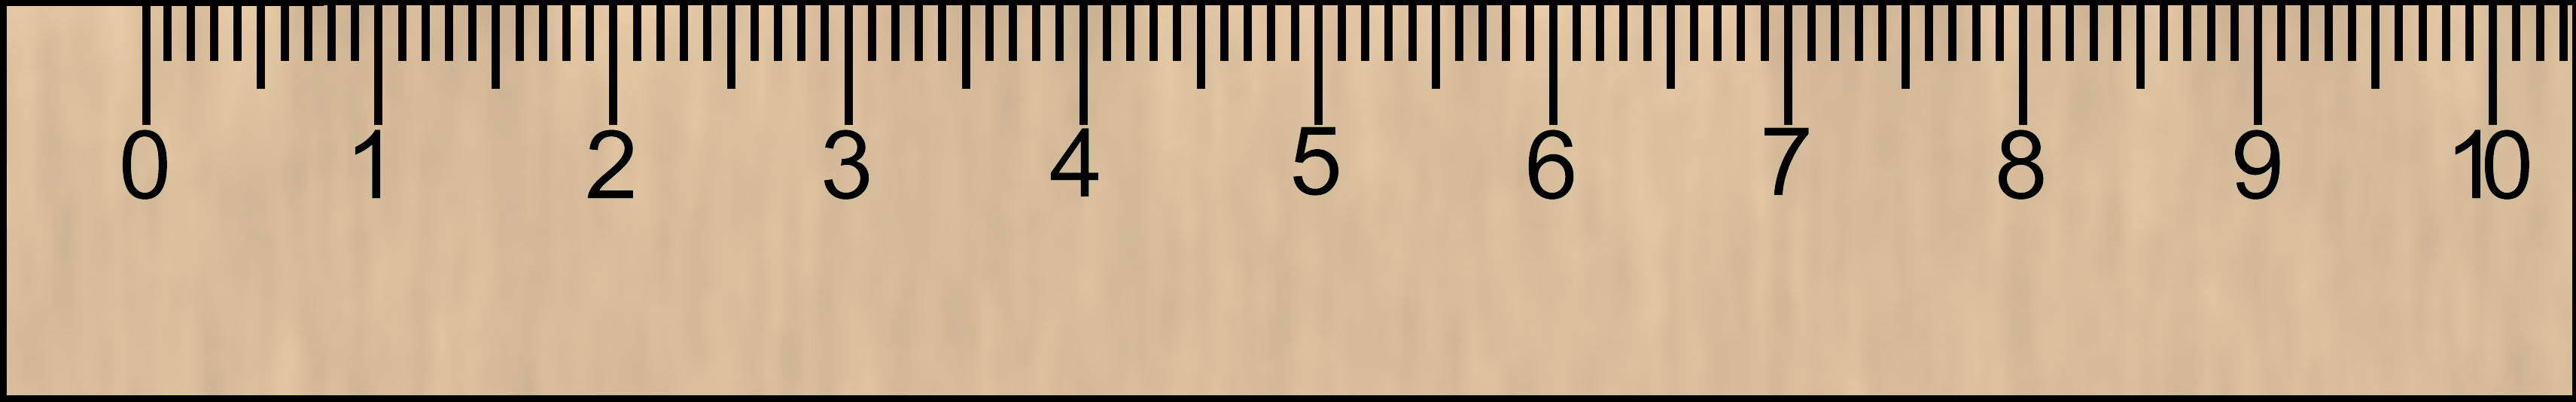 clipart ruler foot ruler